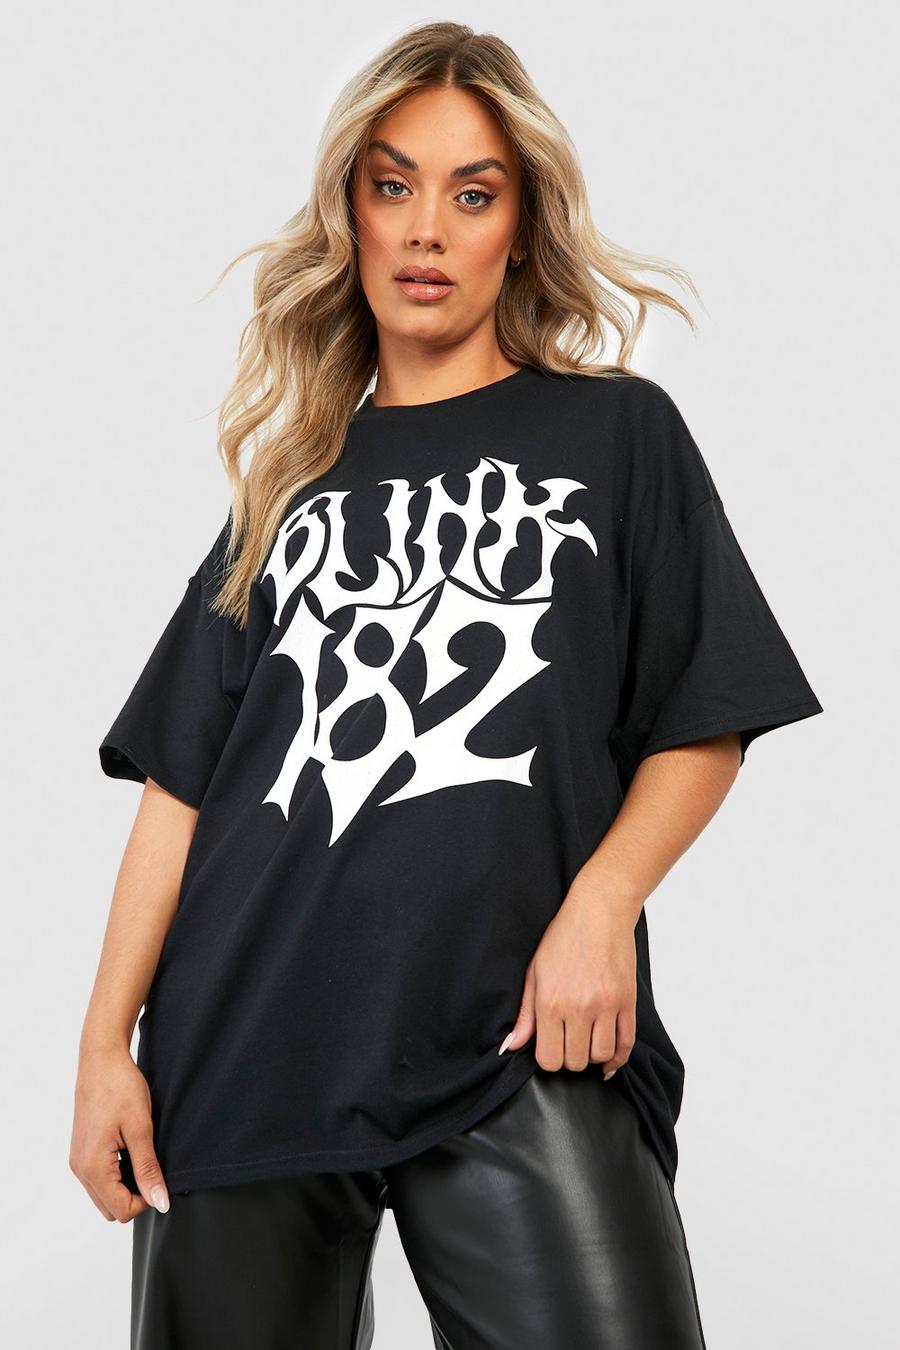 Plus Oversize T-Shirt mit lizenziertem Blink 182 Print, Black noir